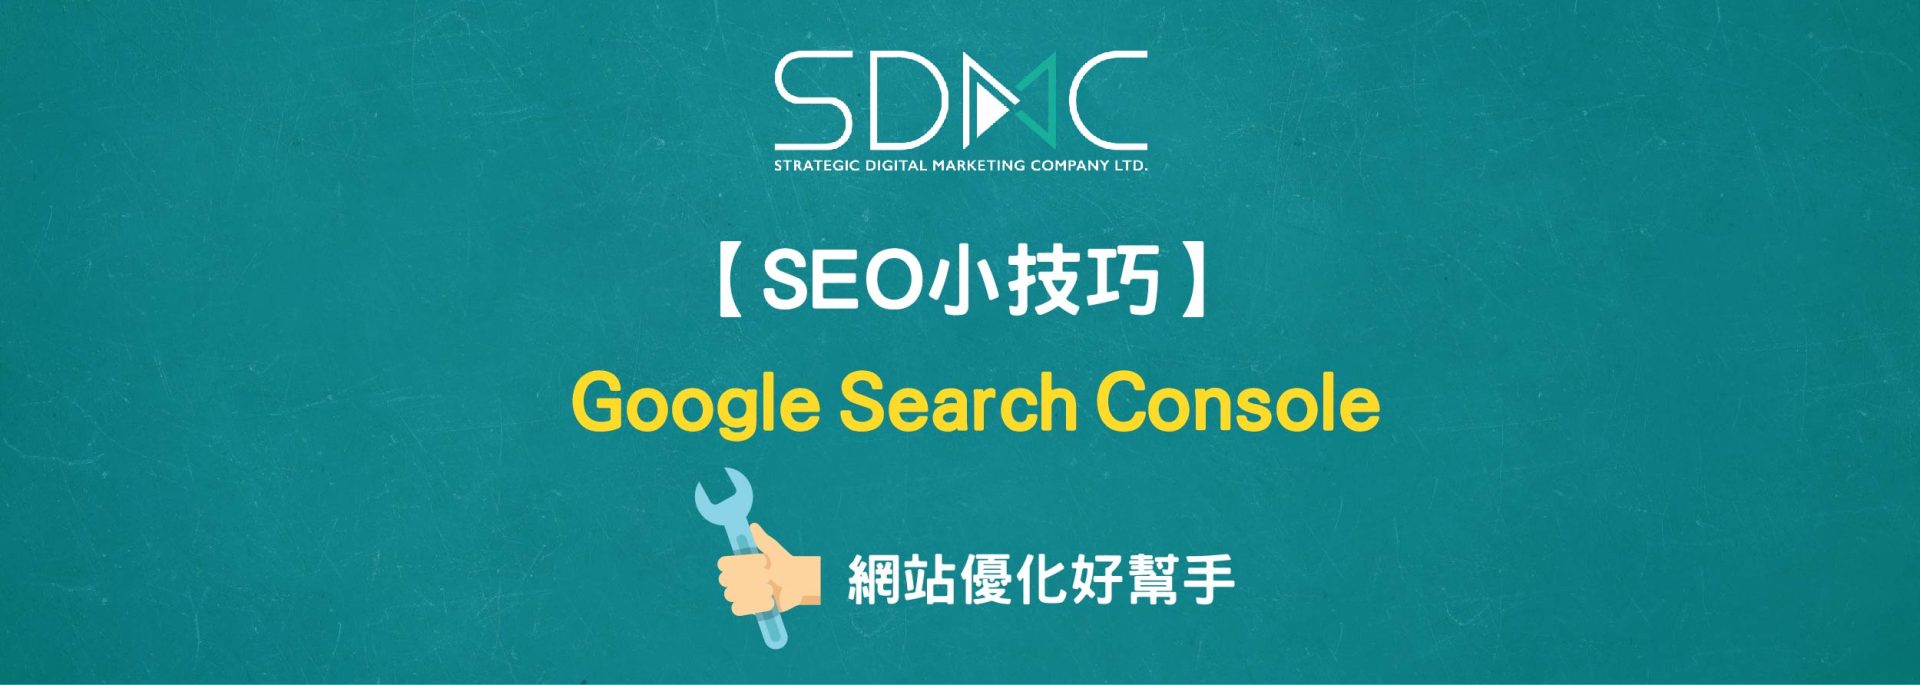 SEO公司 Google Search Console